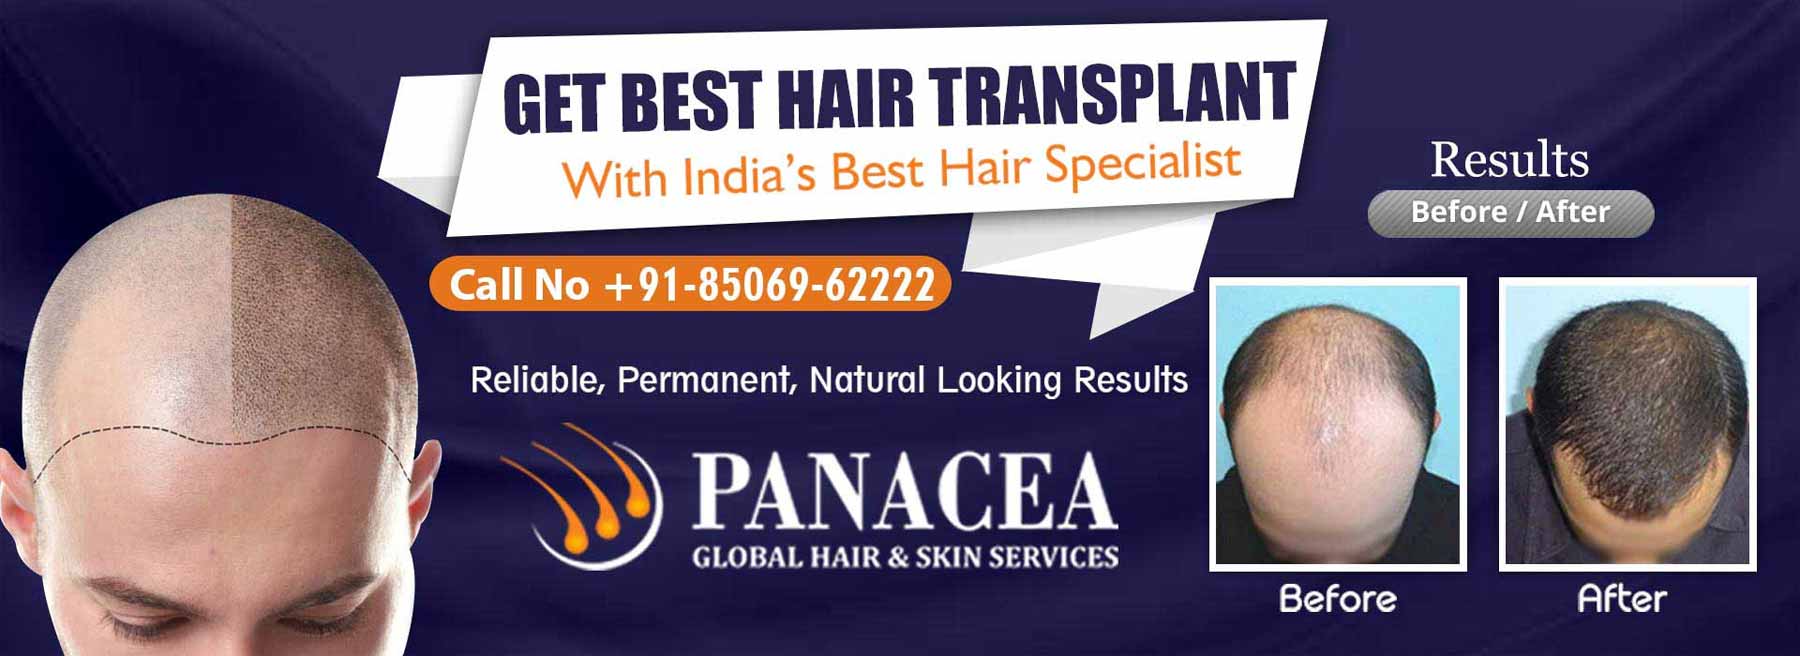 Get Best Hair Transplant - Panacea Global in Saraswati Vihar